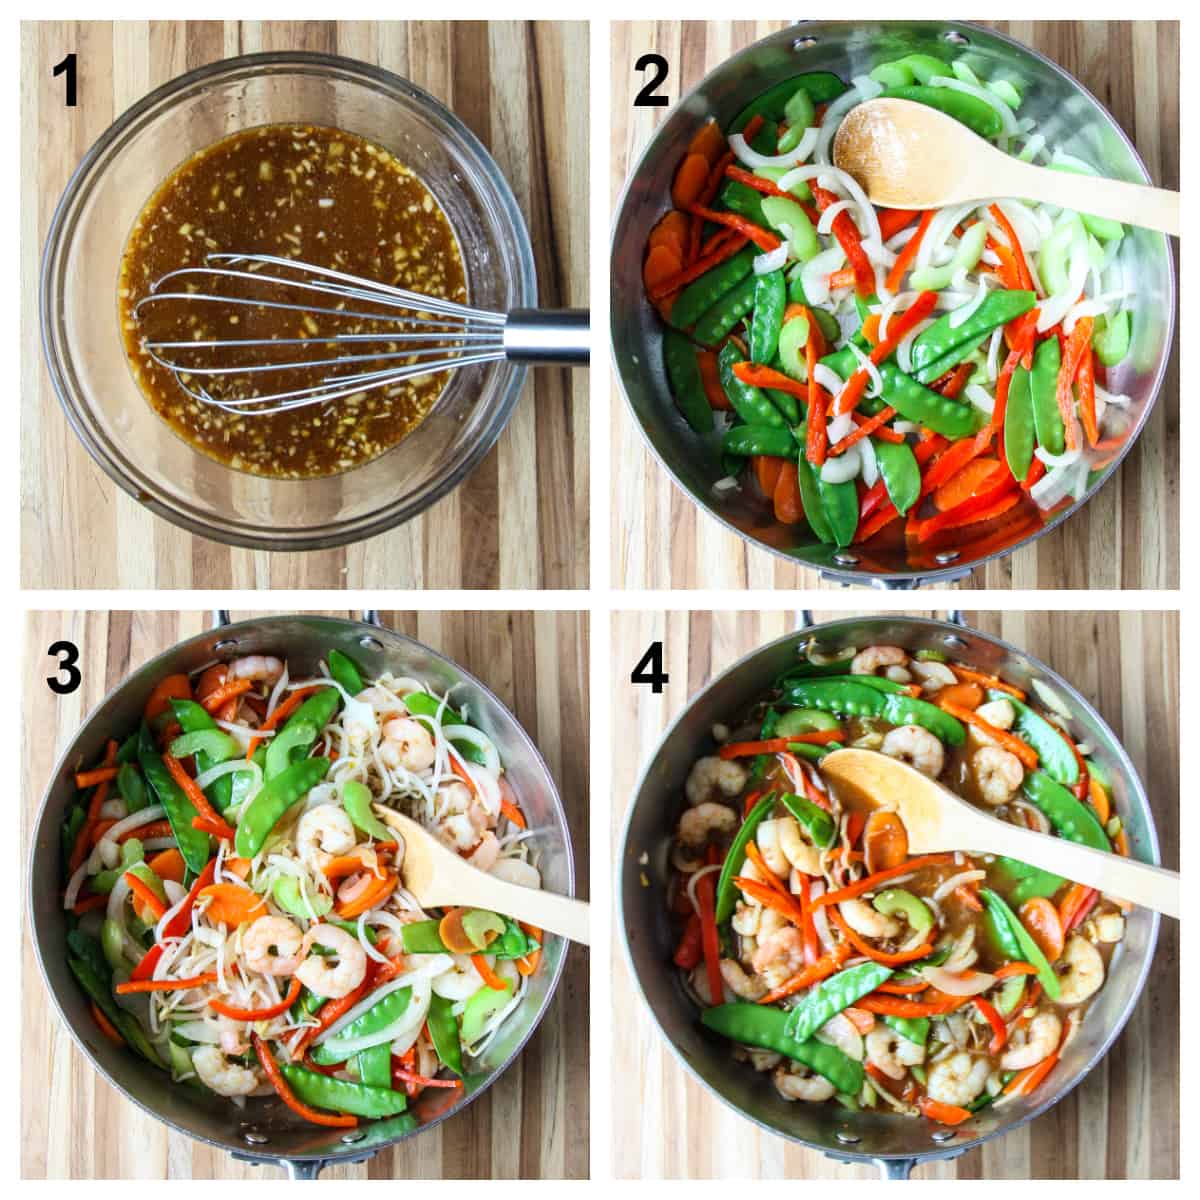 Steps one through four for making shrimp chop suey.